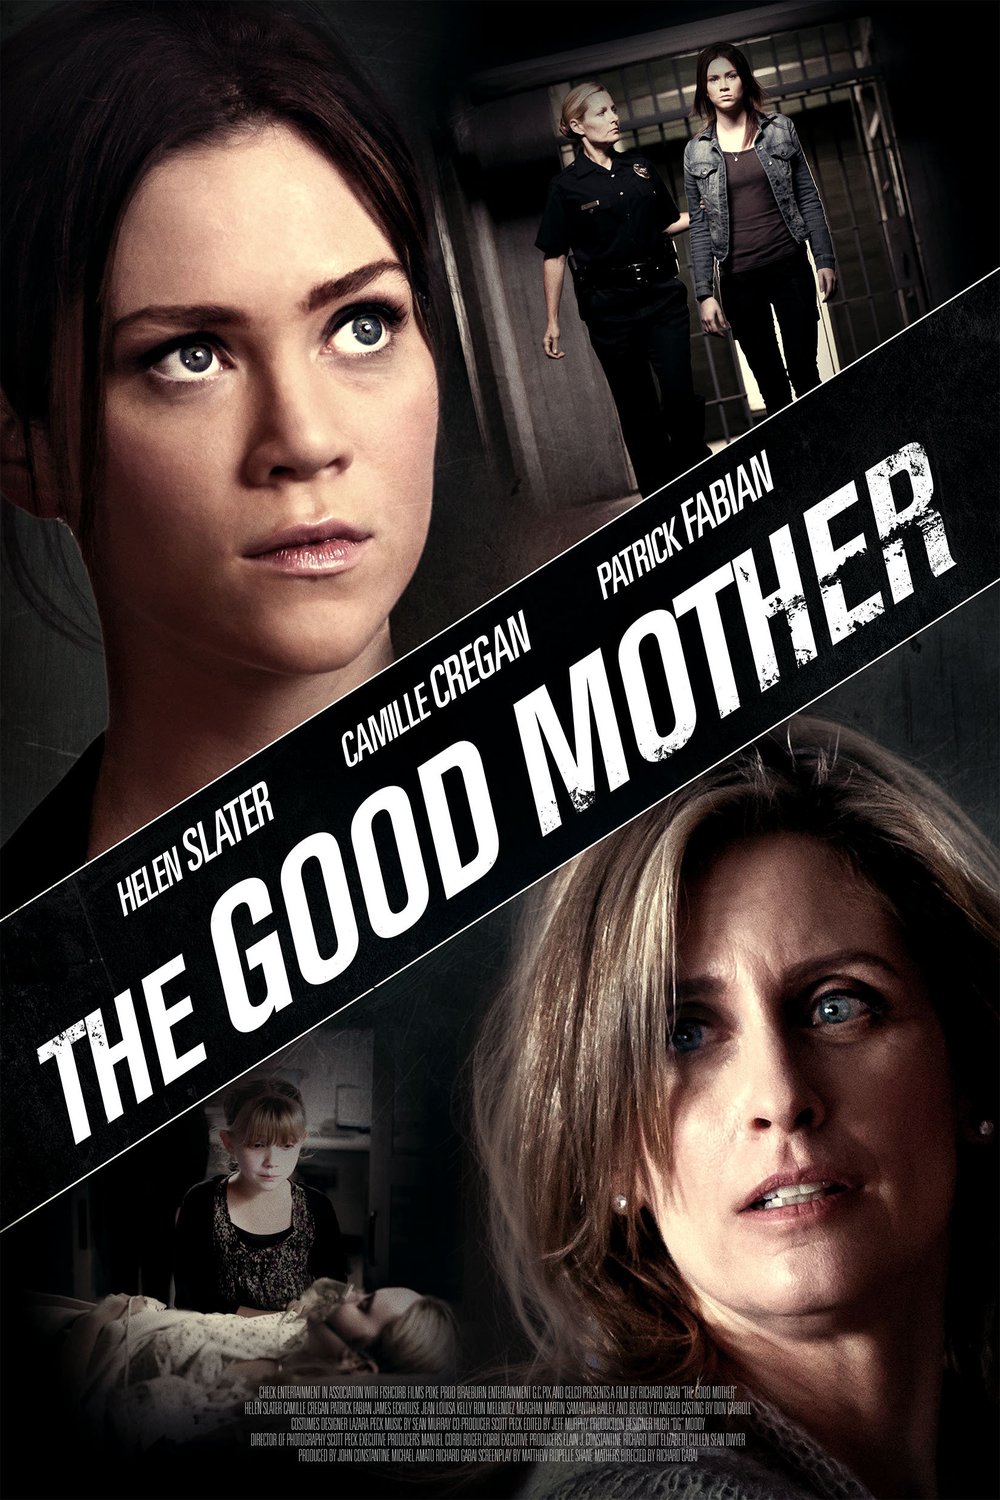 L'affiche du film The Good Mother